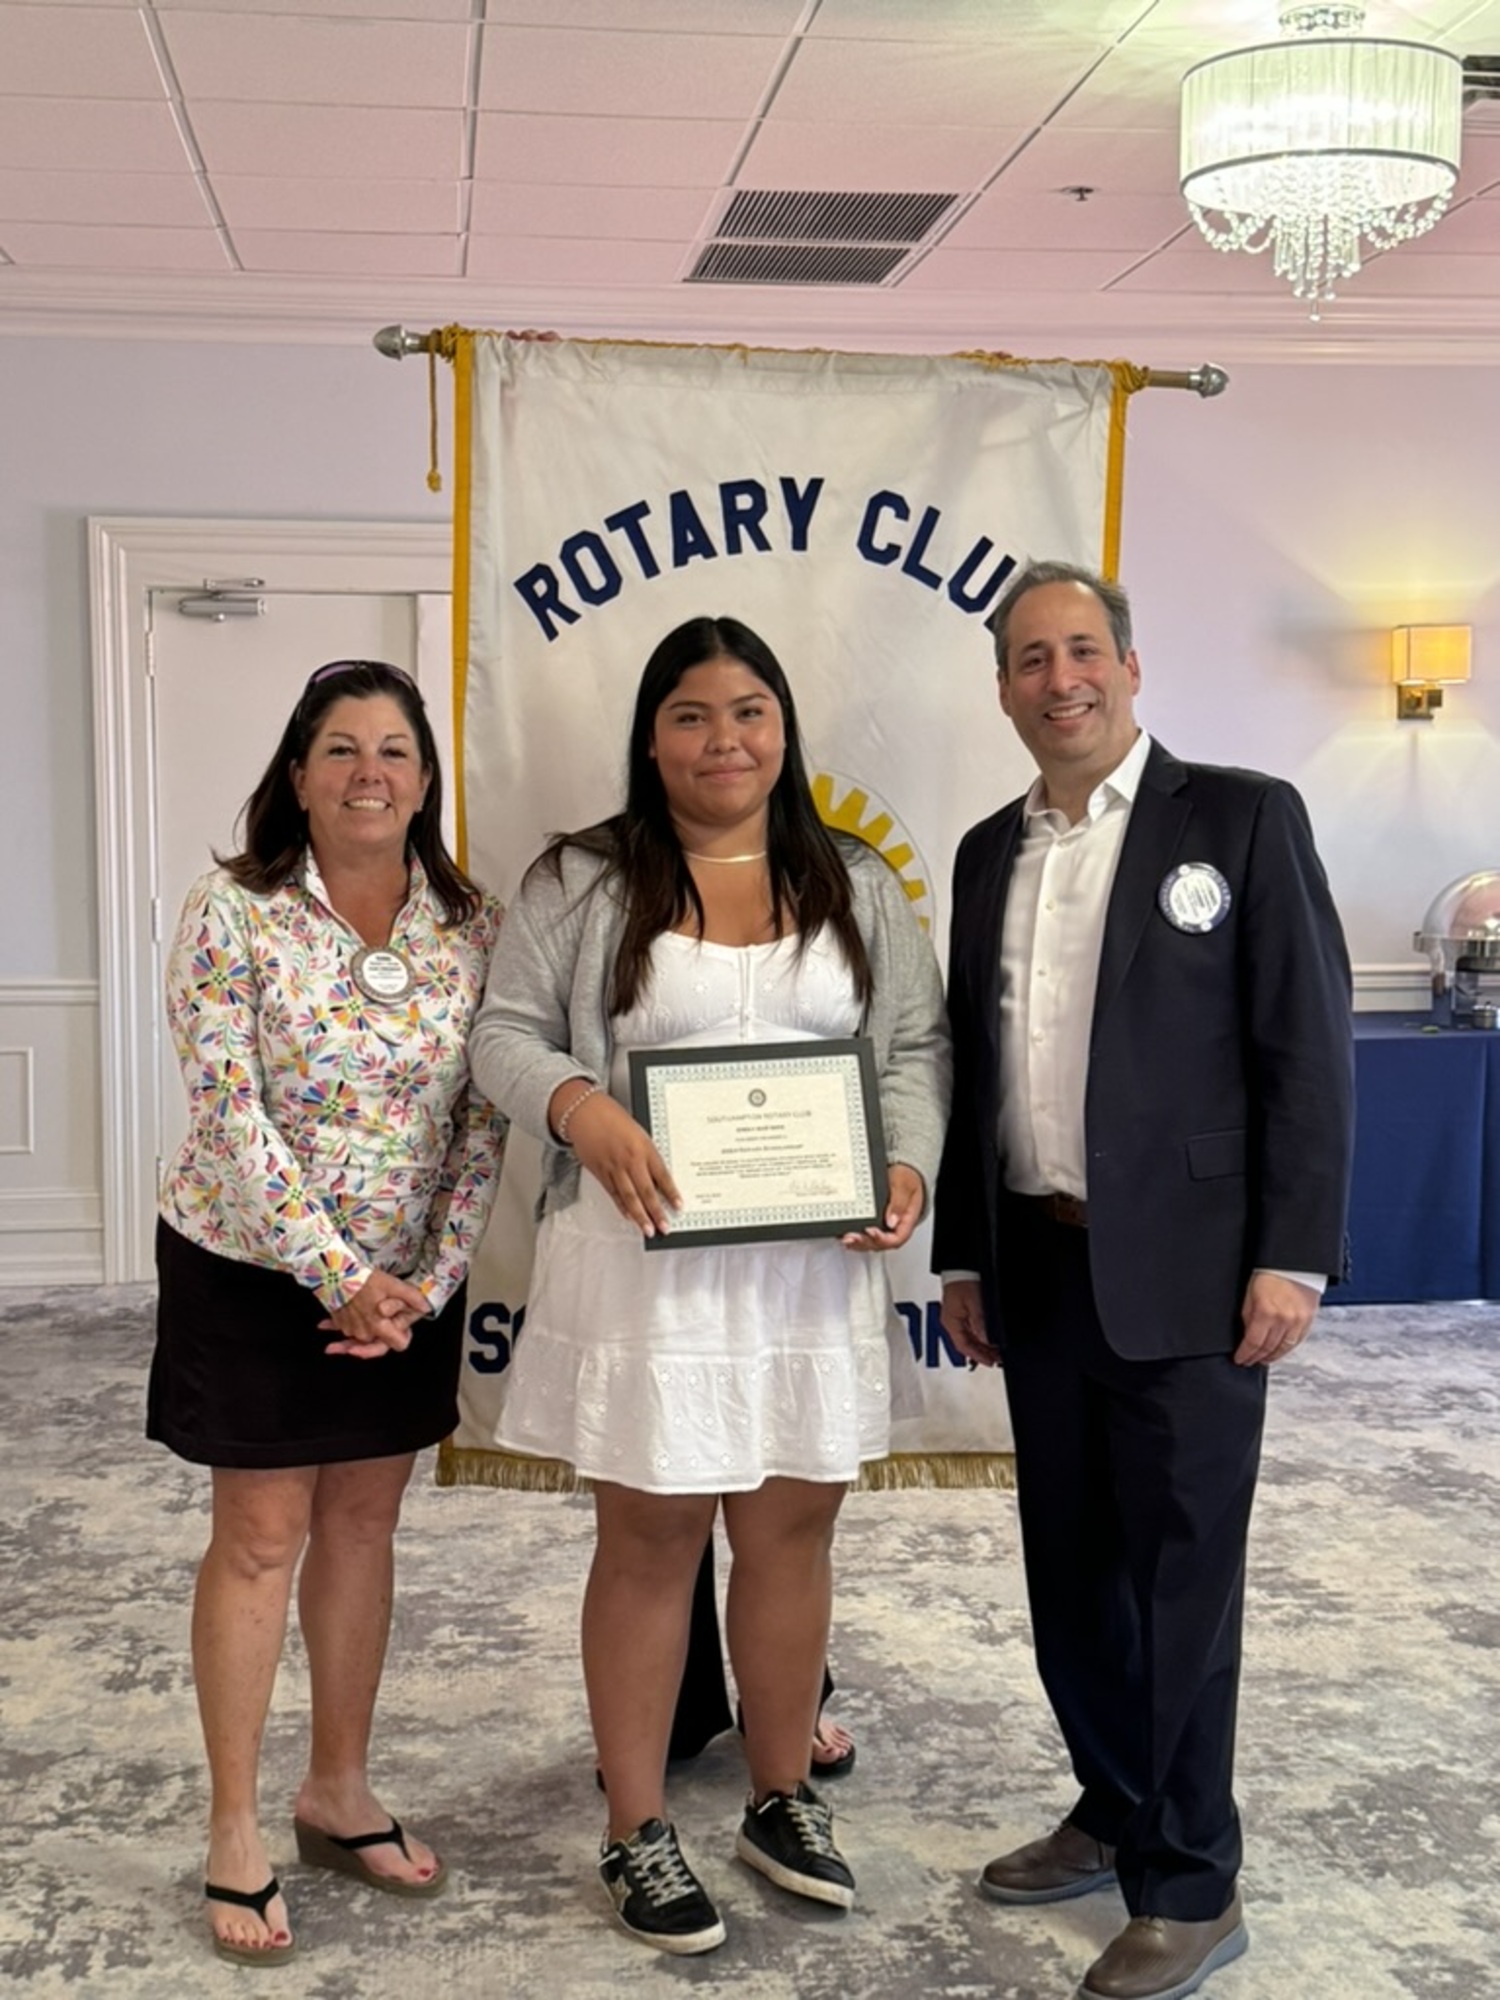 Bridgehampton School senior Sheily Ruiz Soto was awarded a Southampton Rotary scholarship by Rotarian Terri Kiernan and Rotary President Michael Gomberg. COURTESY SOUTHMPTON ROTARY